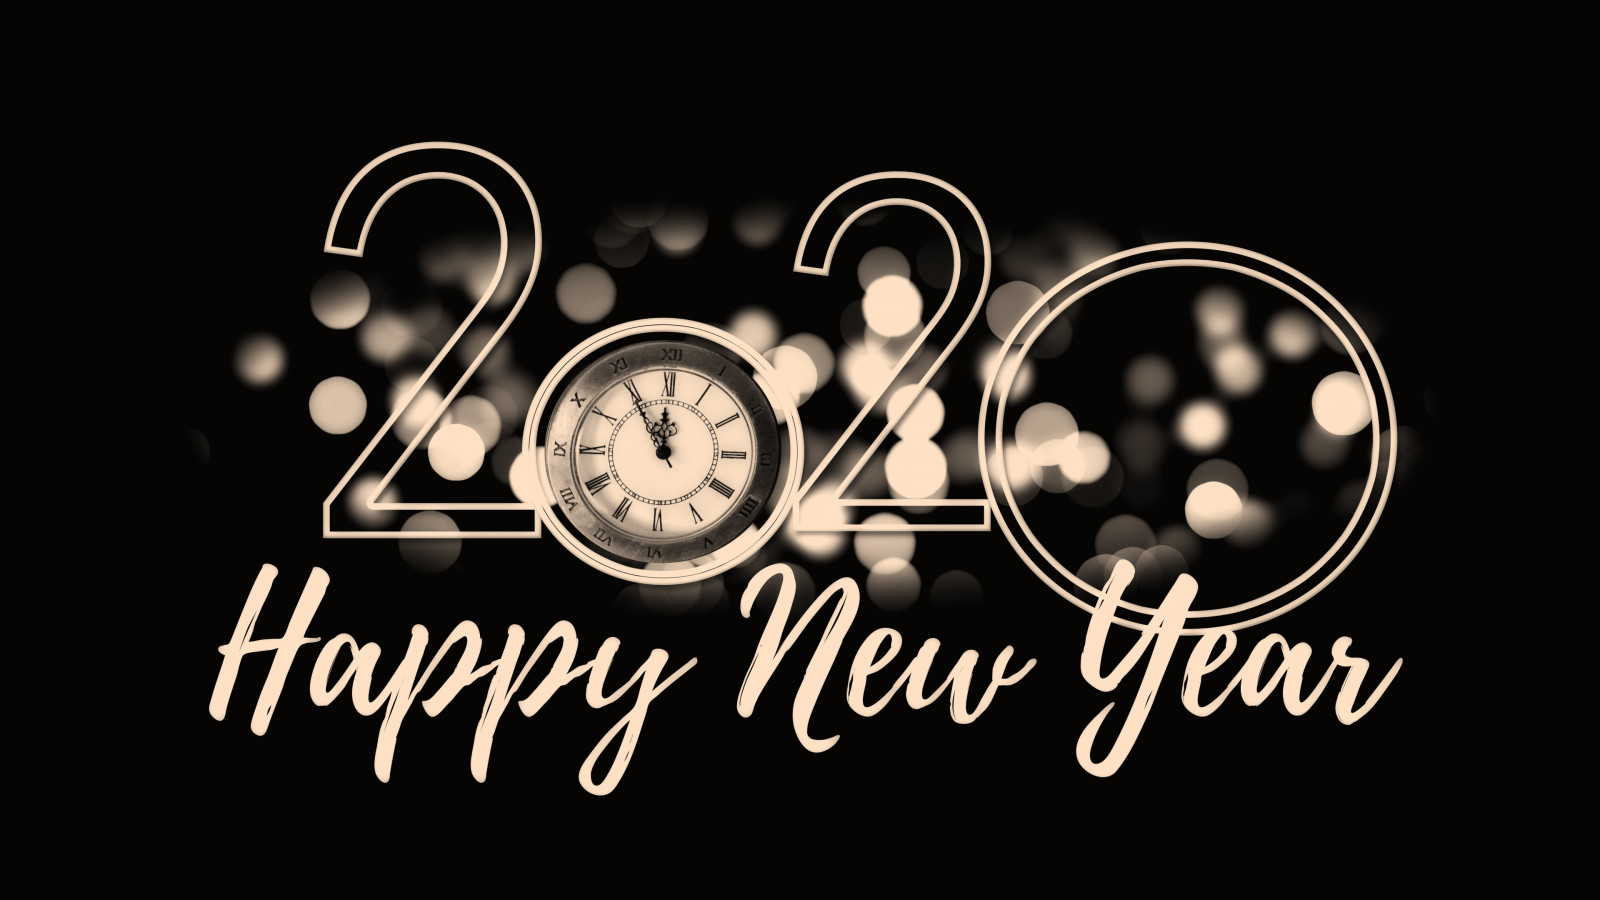 2020 Happy New Year wallpaper 1600x900